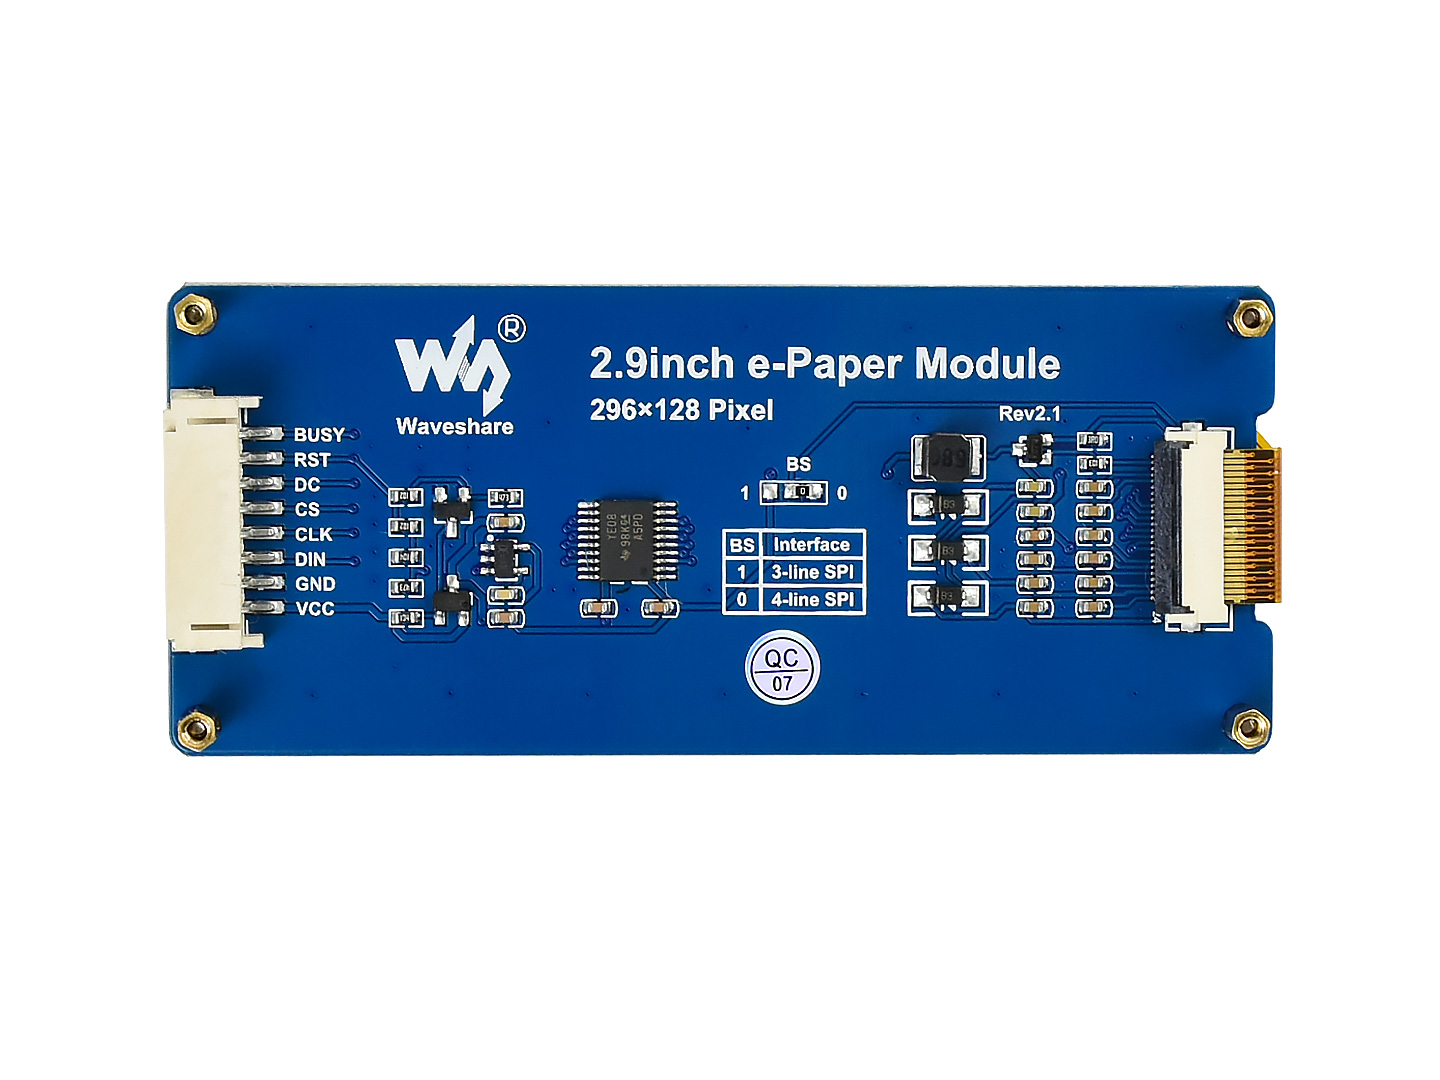 2.9inch e-Paper Module